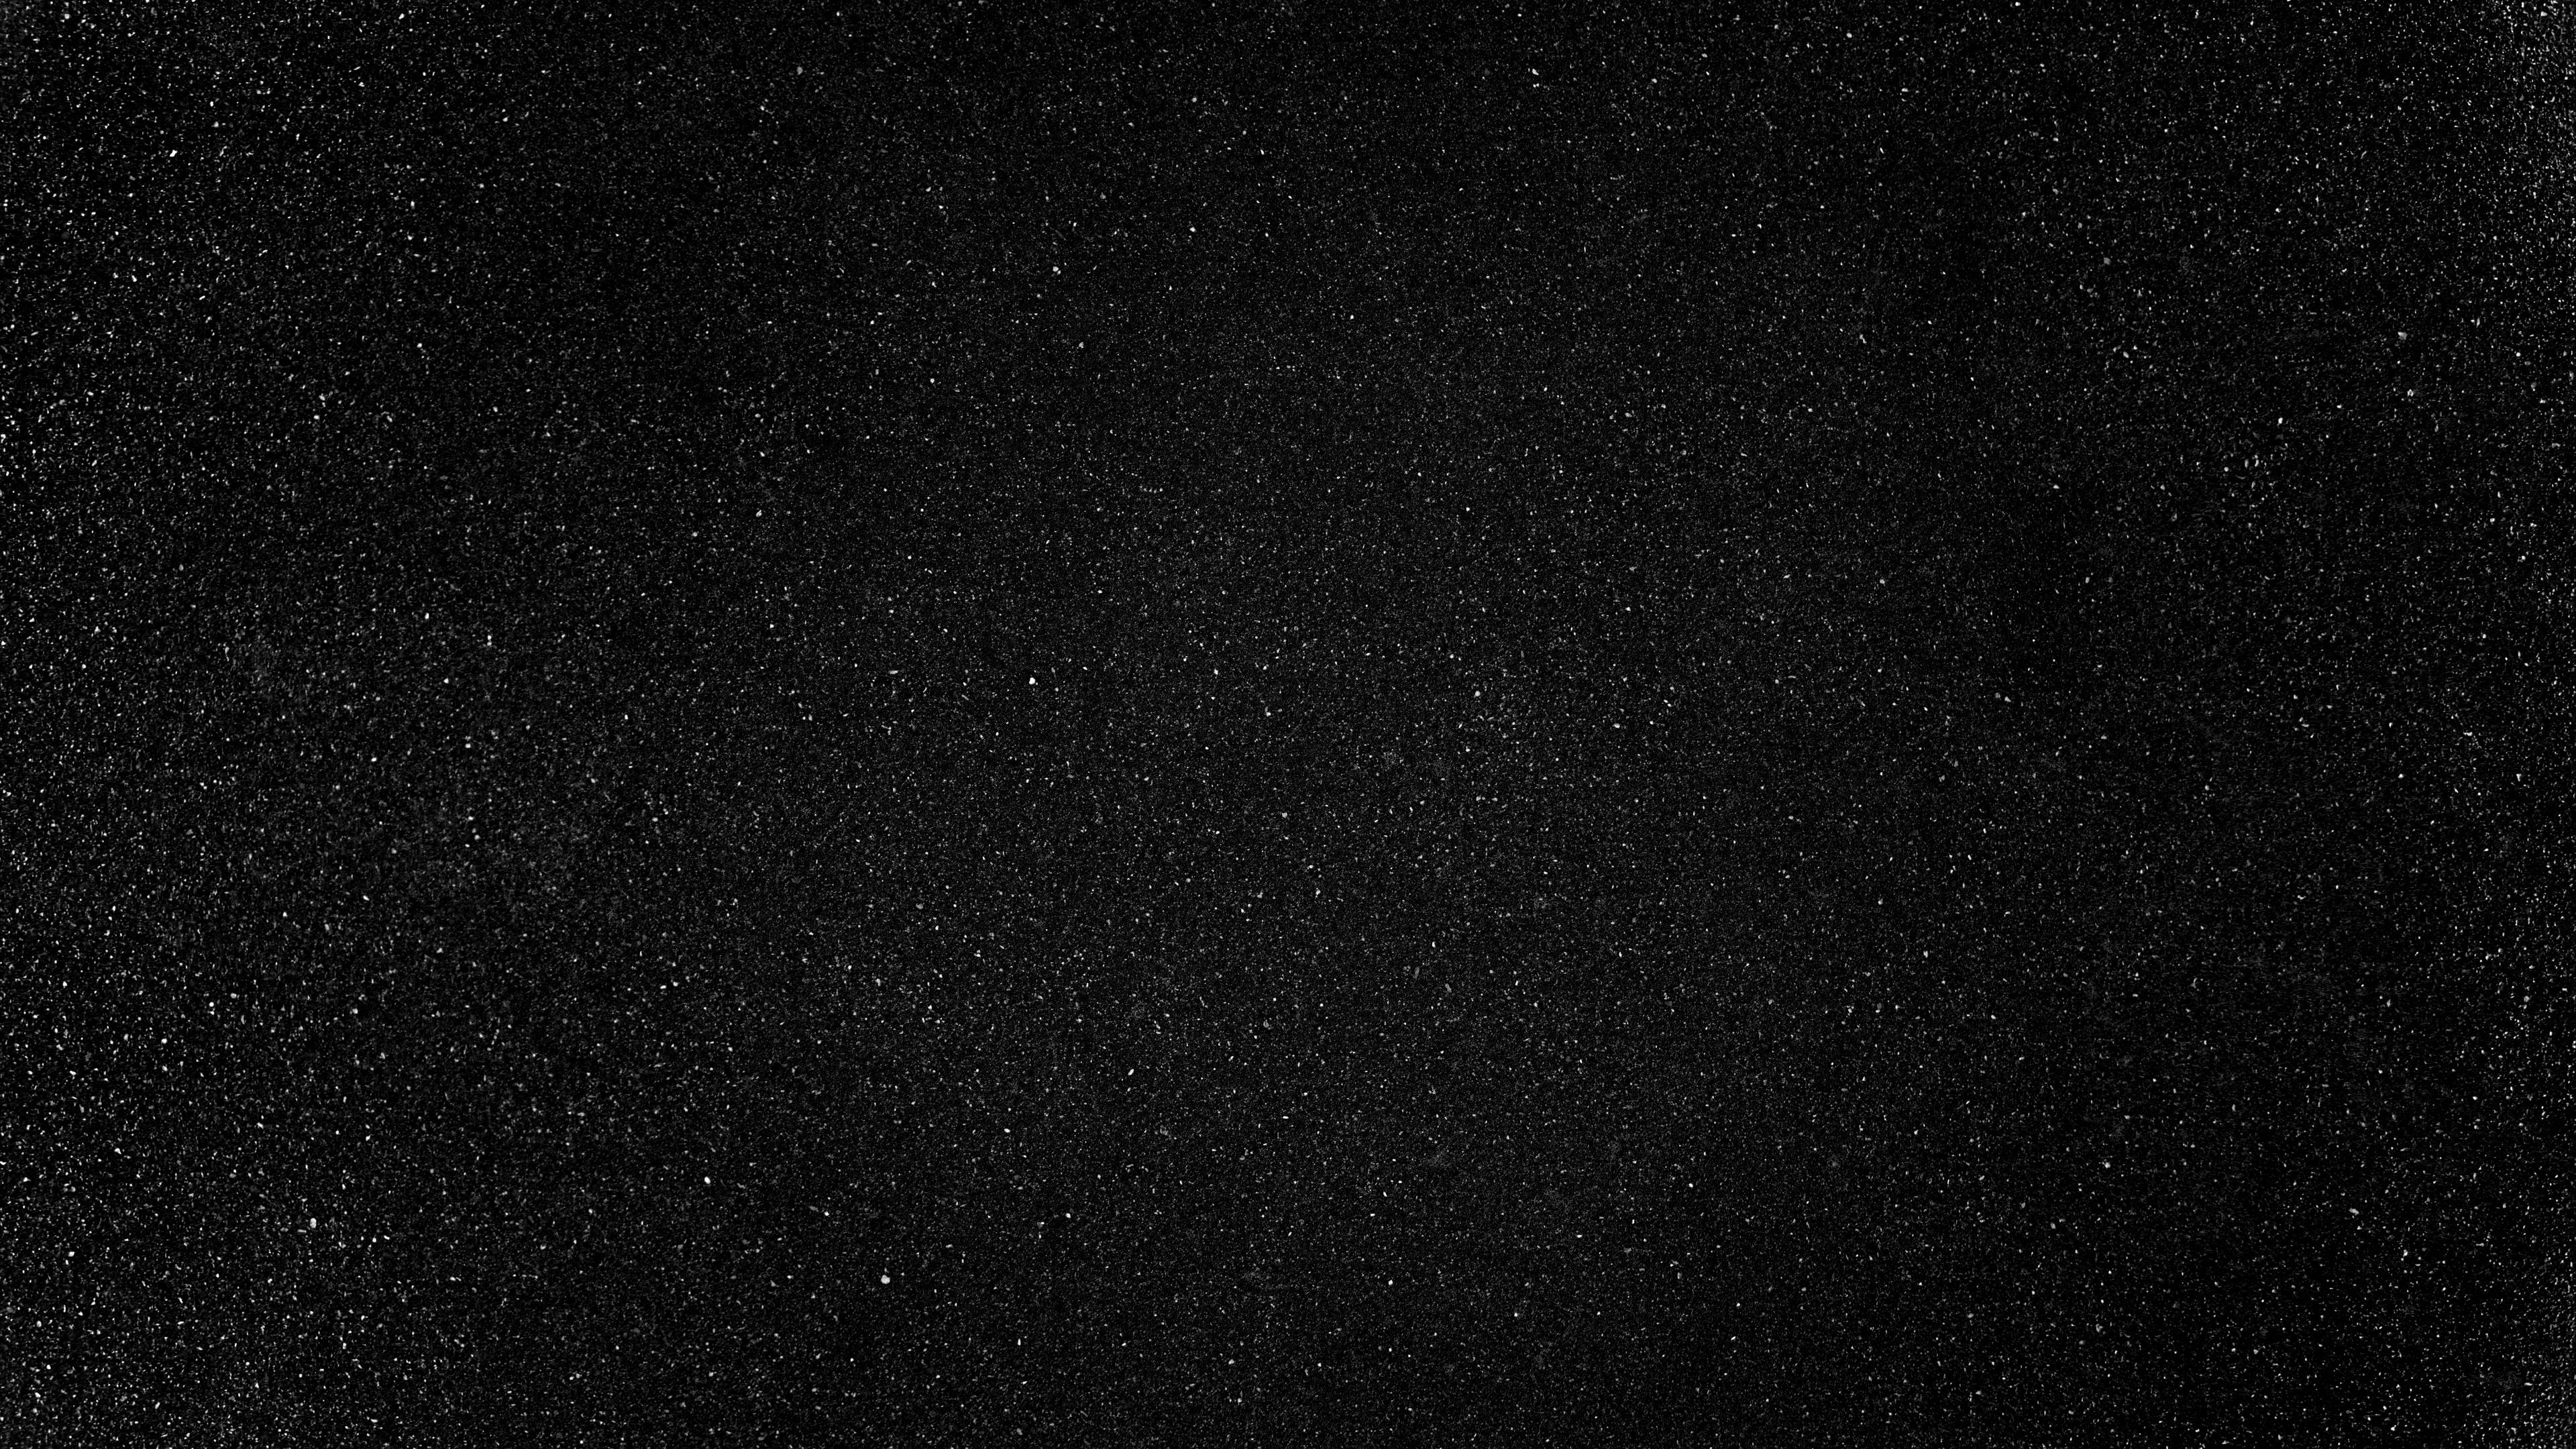 Download wallpaper 3840x2160 stars, night, black, starry sky 4k uhd 16:9 HD background